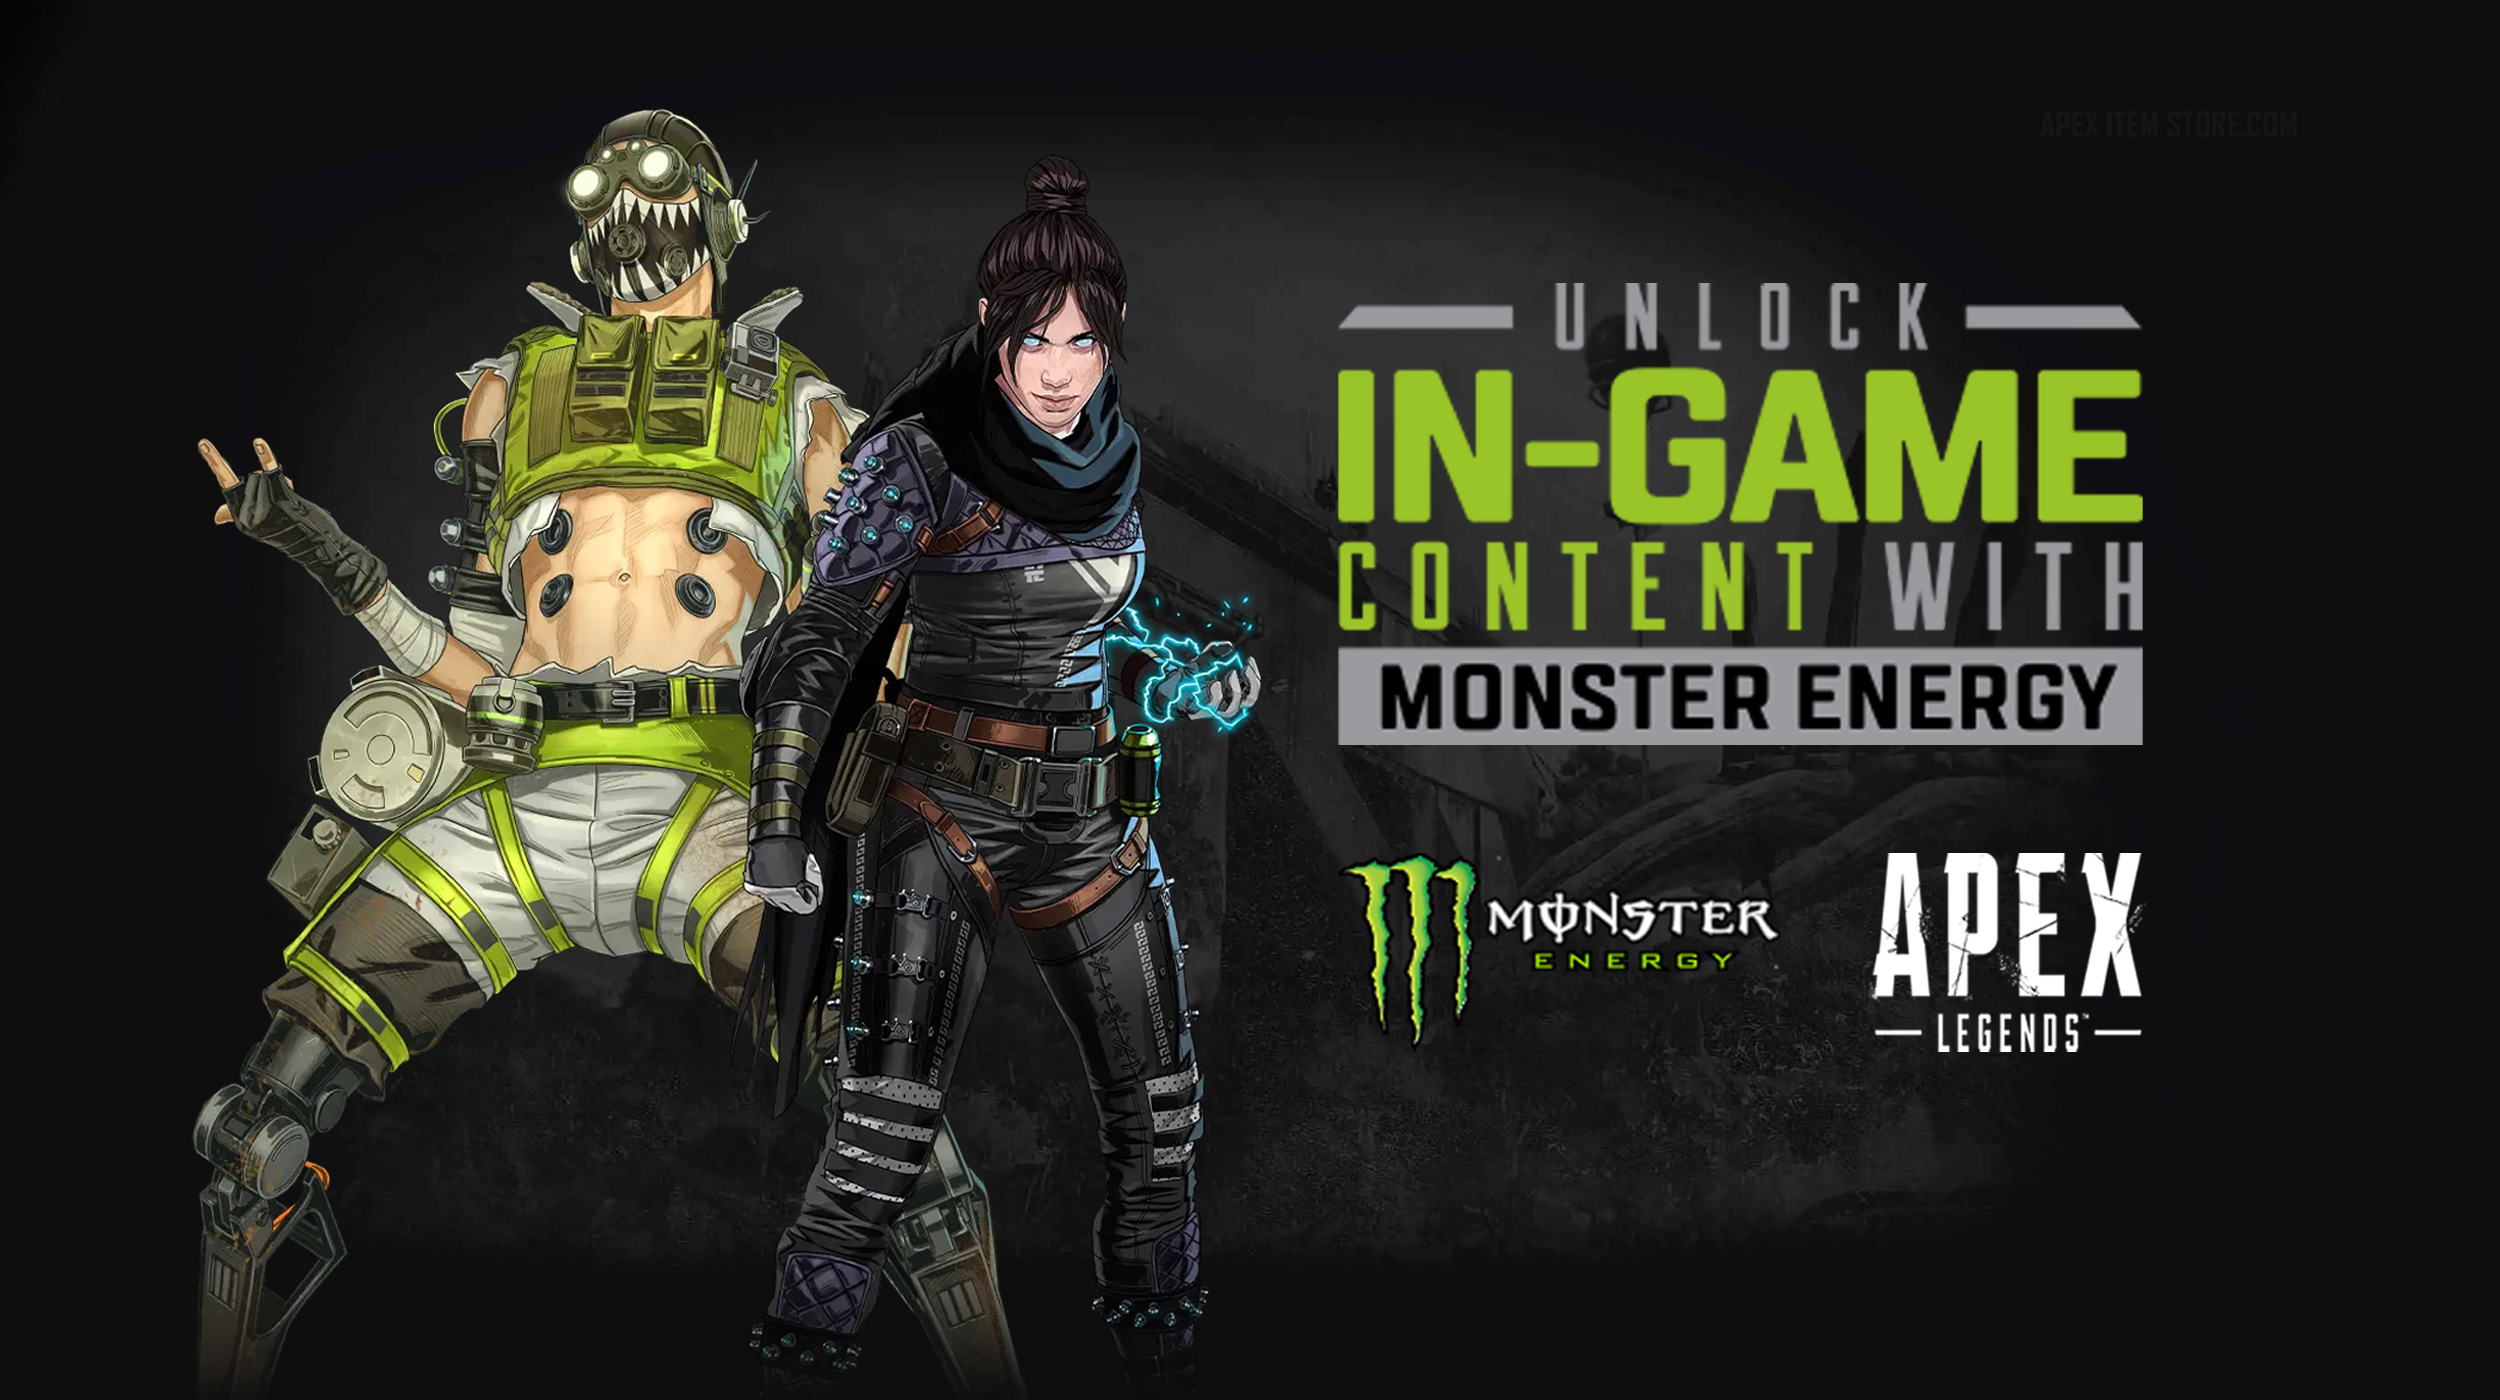 apex legends monster energy where to buy